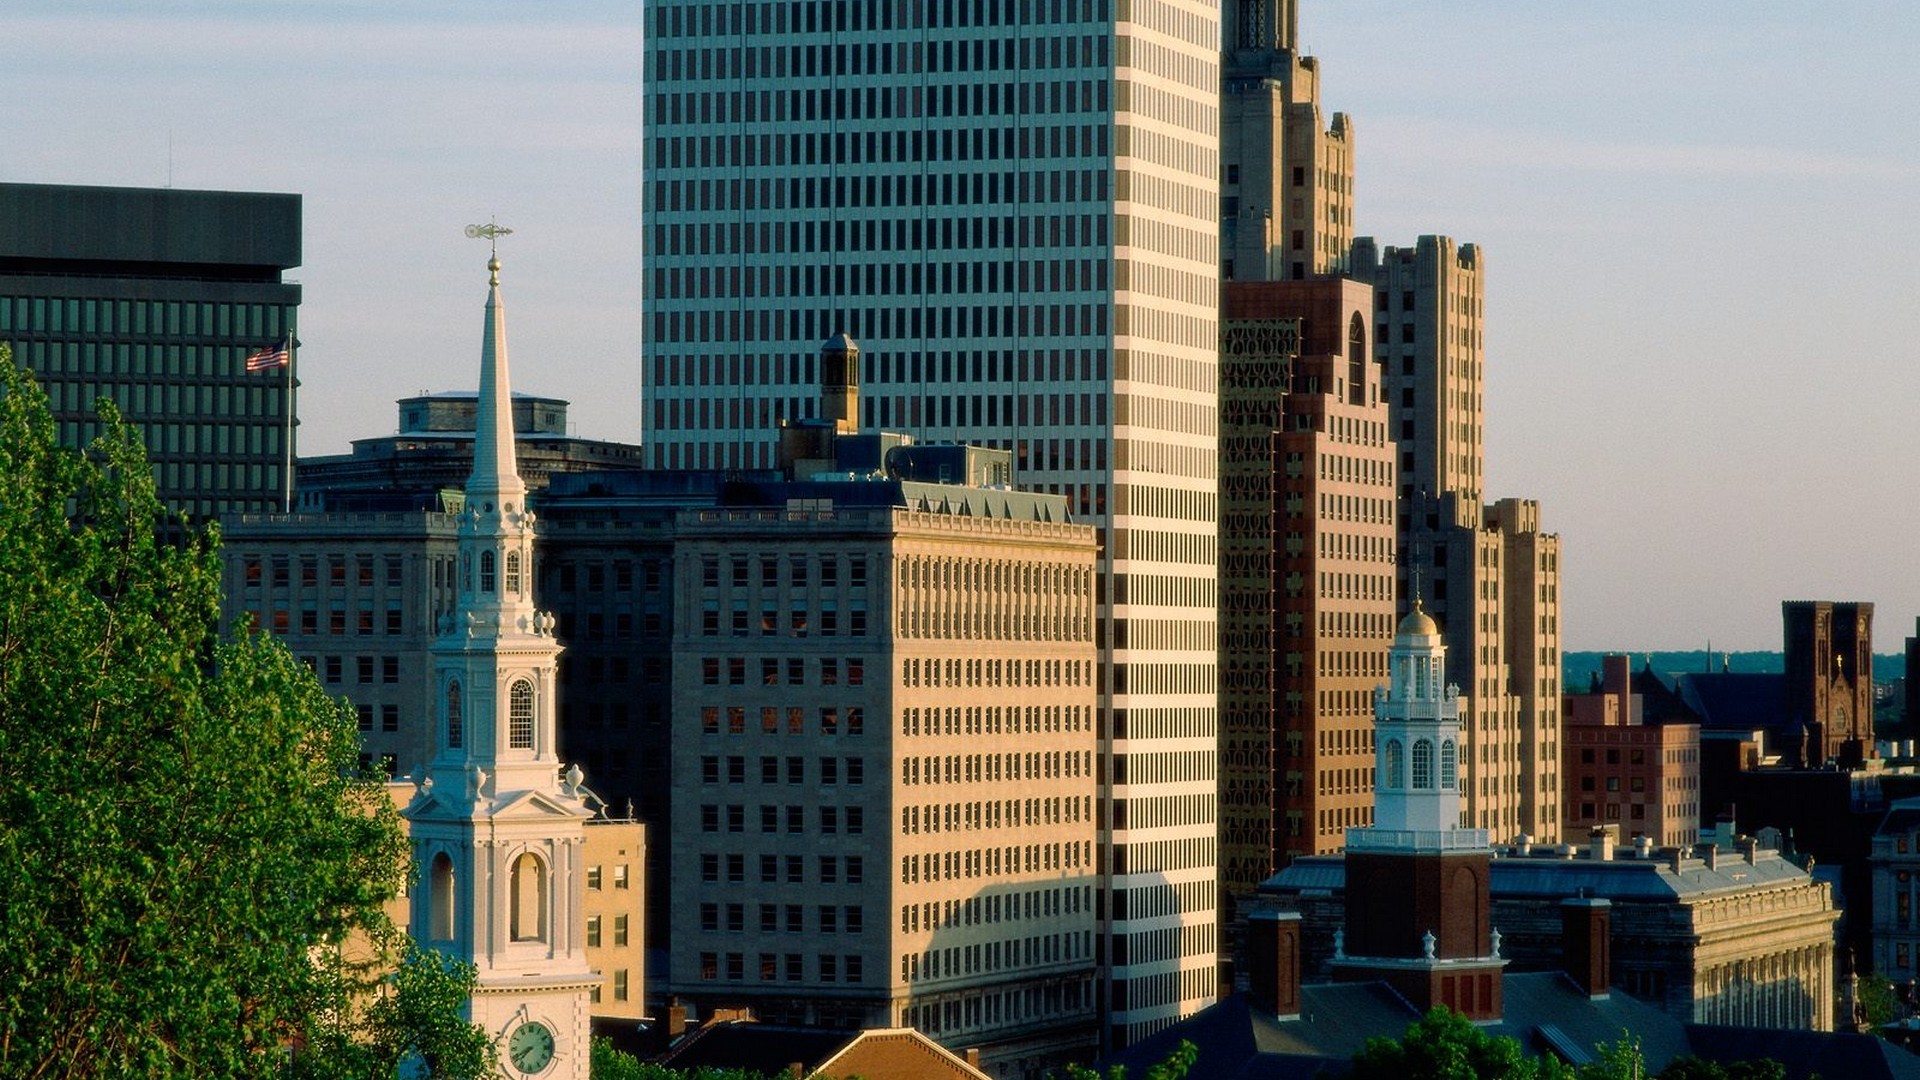 Фото зданий в городе. Провиденс. Провиденс город в США. Род Айленд. Архитектура Провиденса.